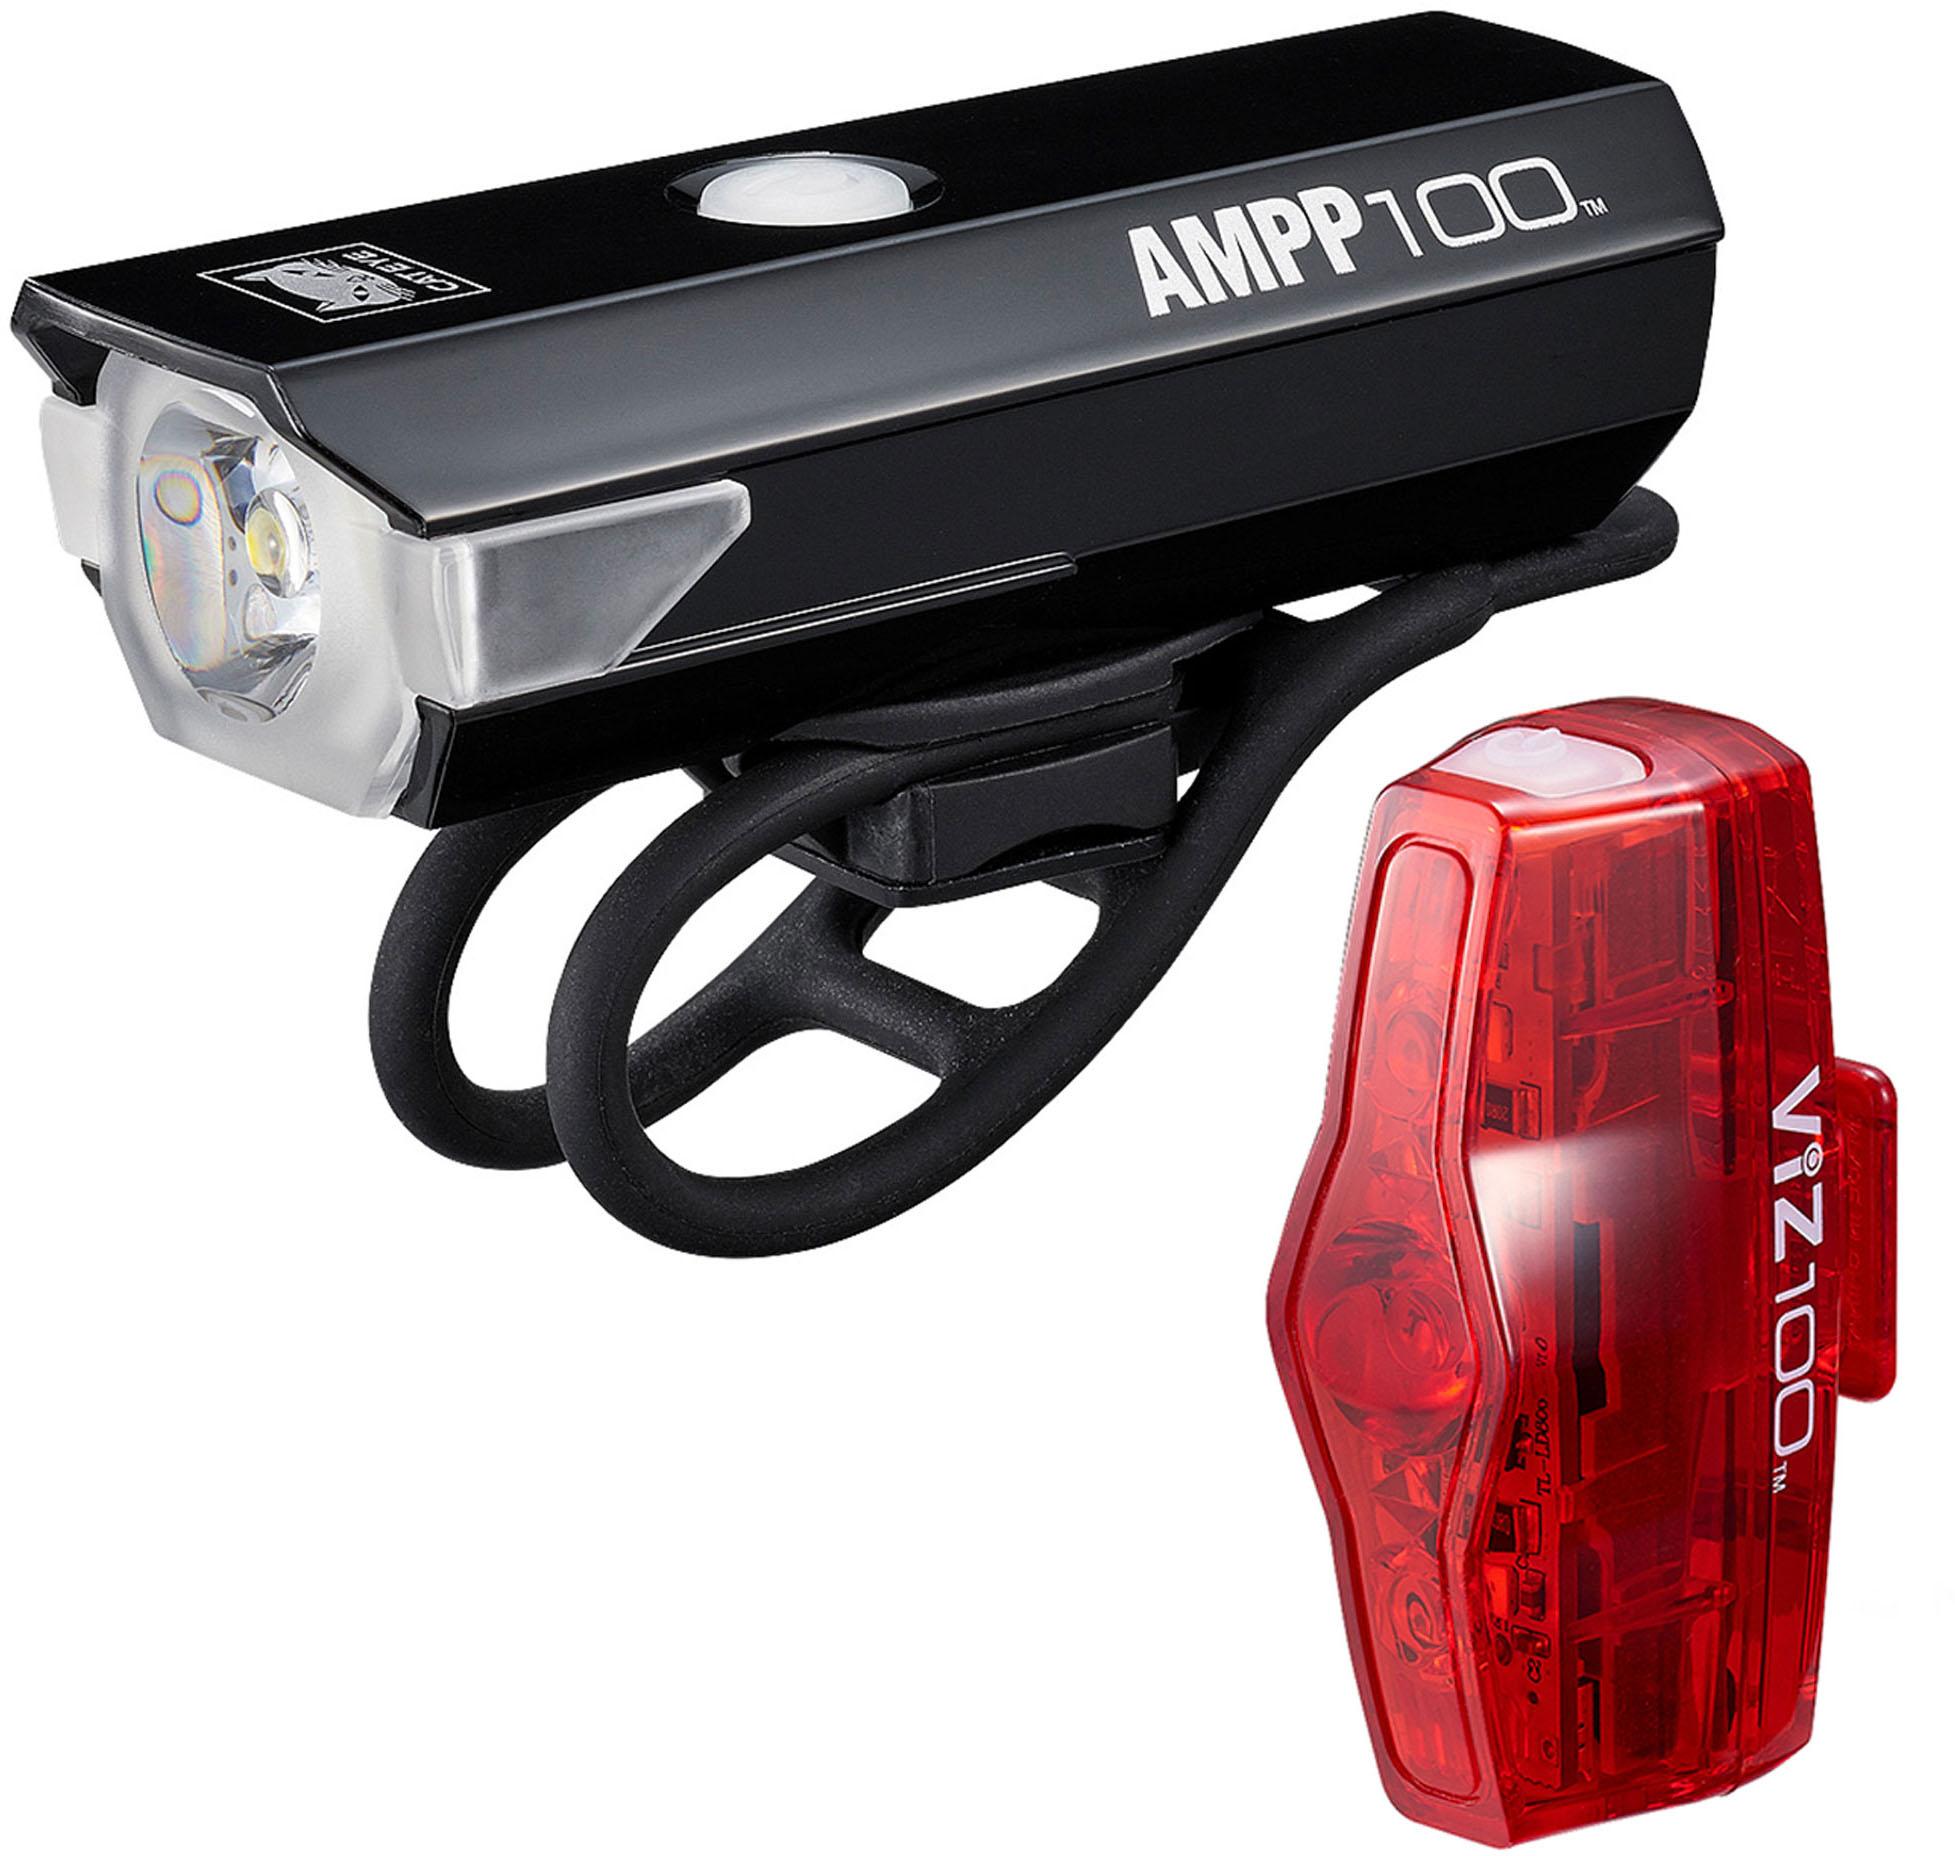 Cateye Ampp 100 And Viz 100 Light Set  Black/red